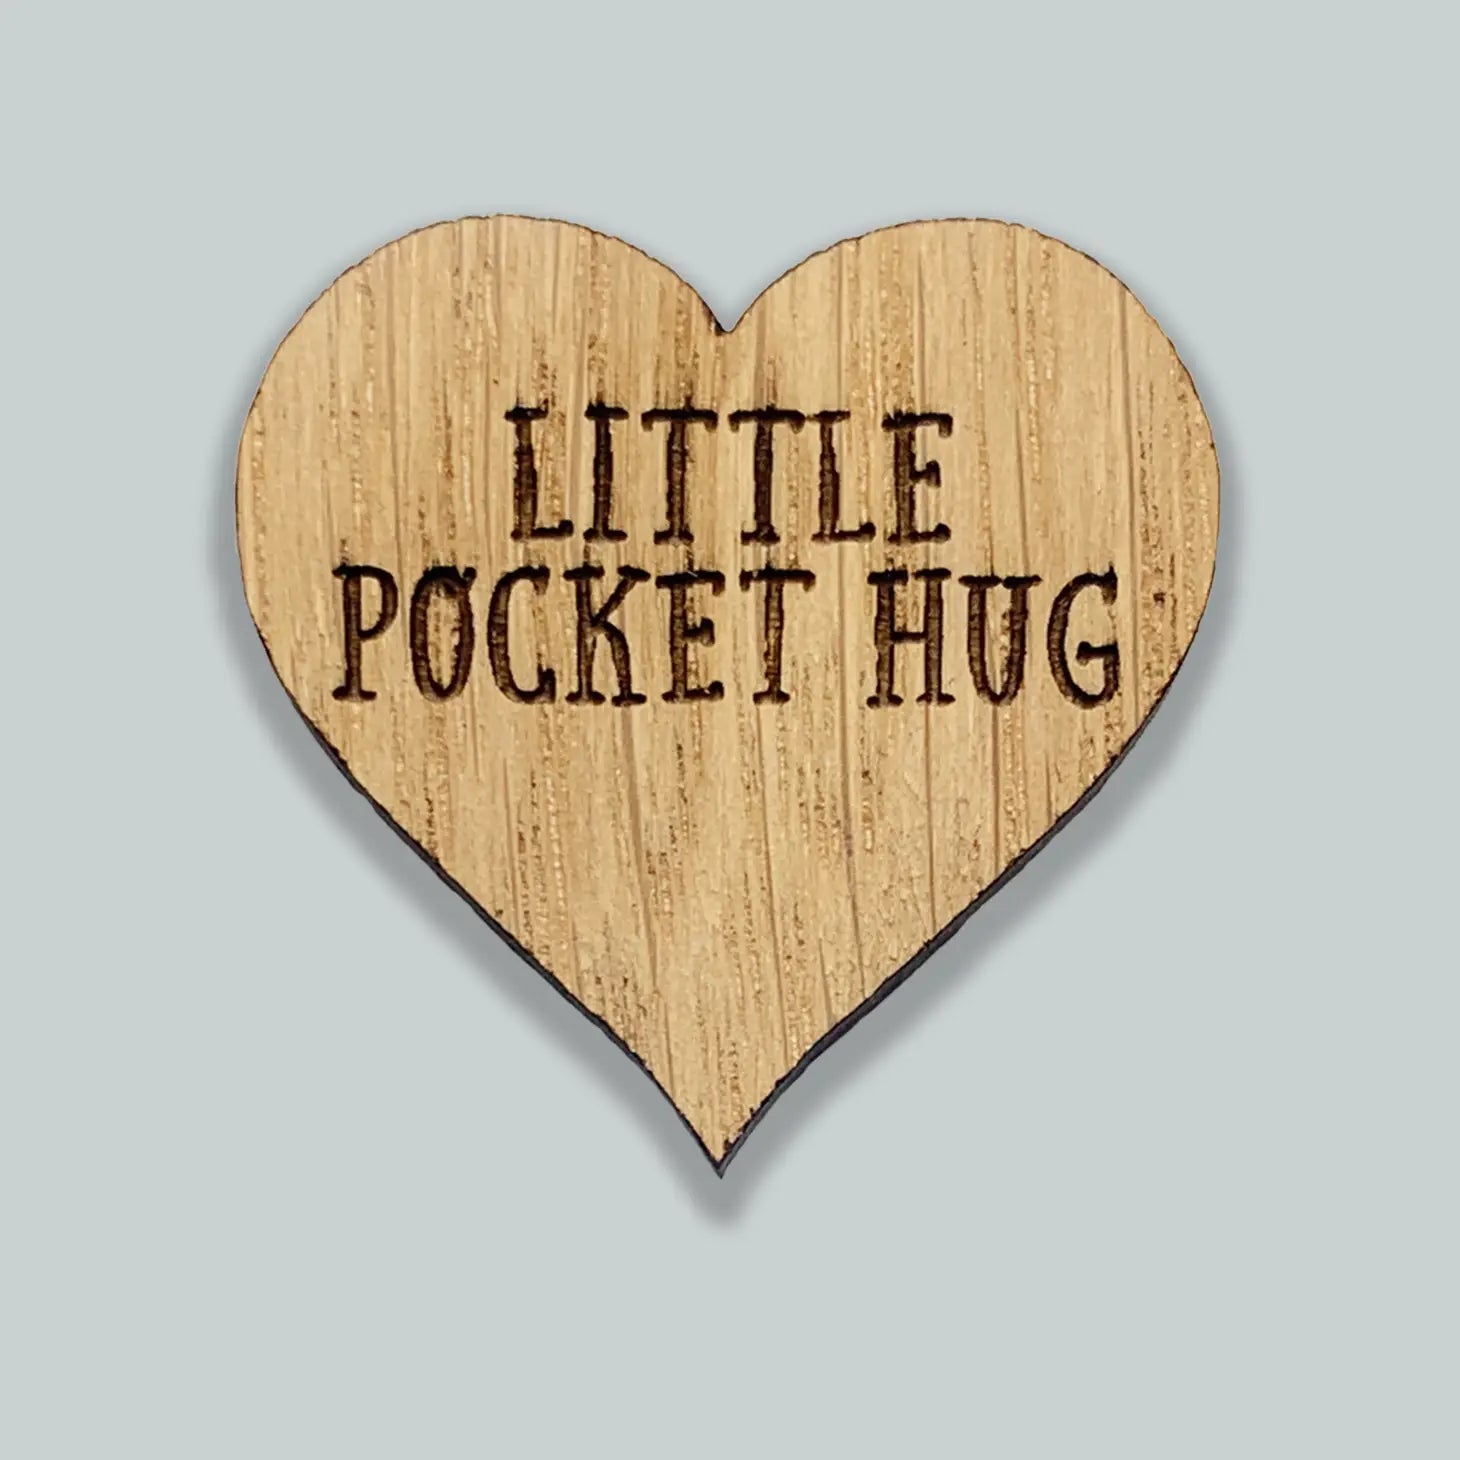 Big Bear Hug  Little Pocket Hug - The Vintage Garden